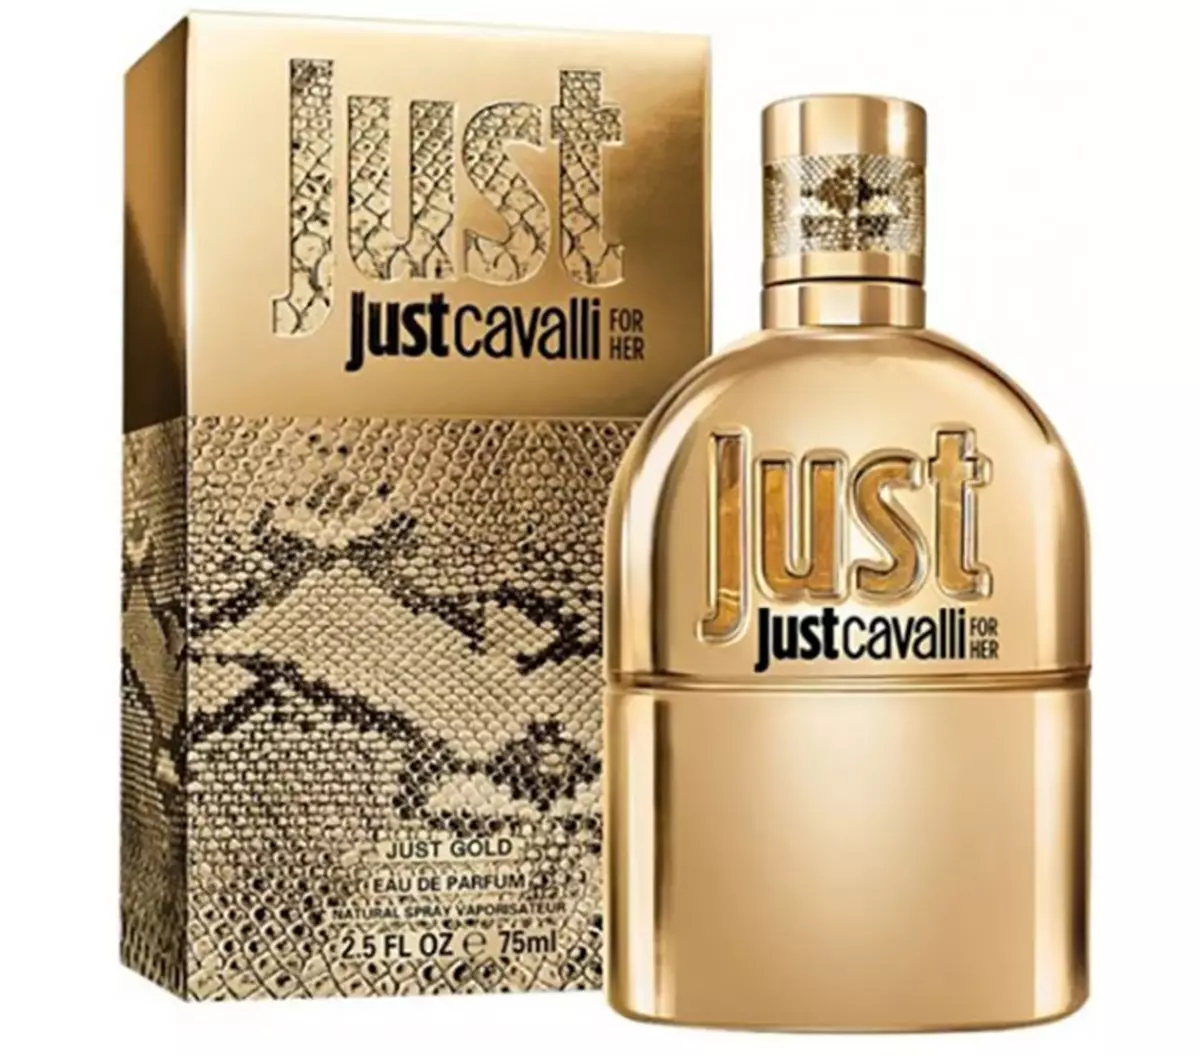 Perfume Roberto Cavalli: Perfume wanita, hanya Cavalli dan air tandas lain, Aromas Roberto Cavalli Eau de Parfum, Paradiso dan Acqua 25296_29